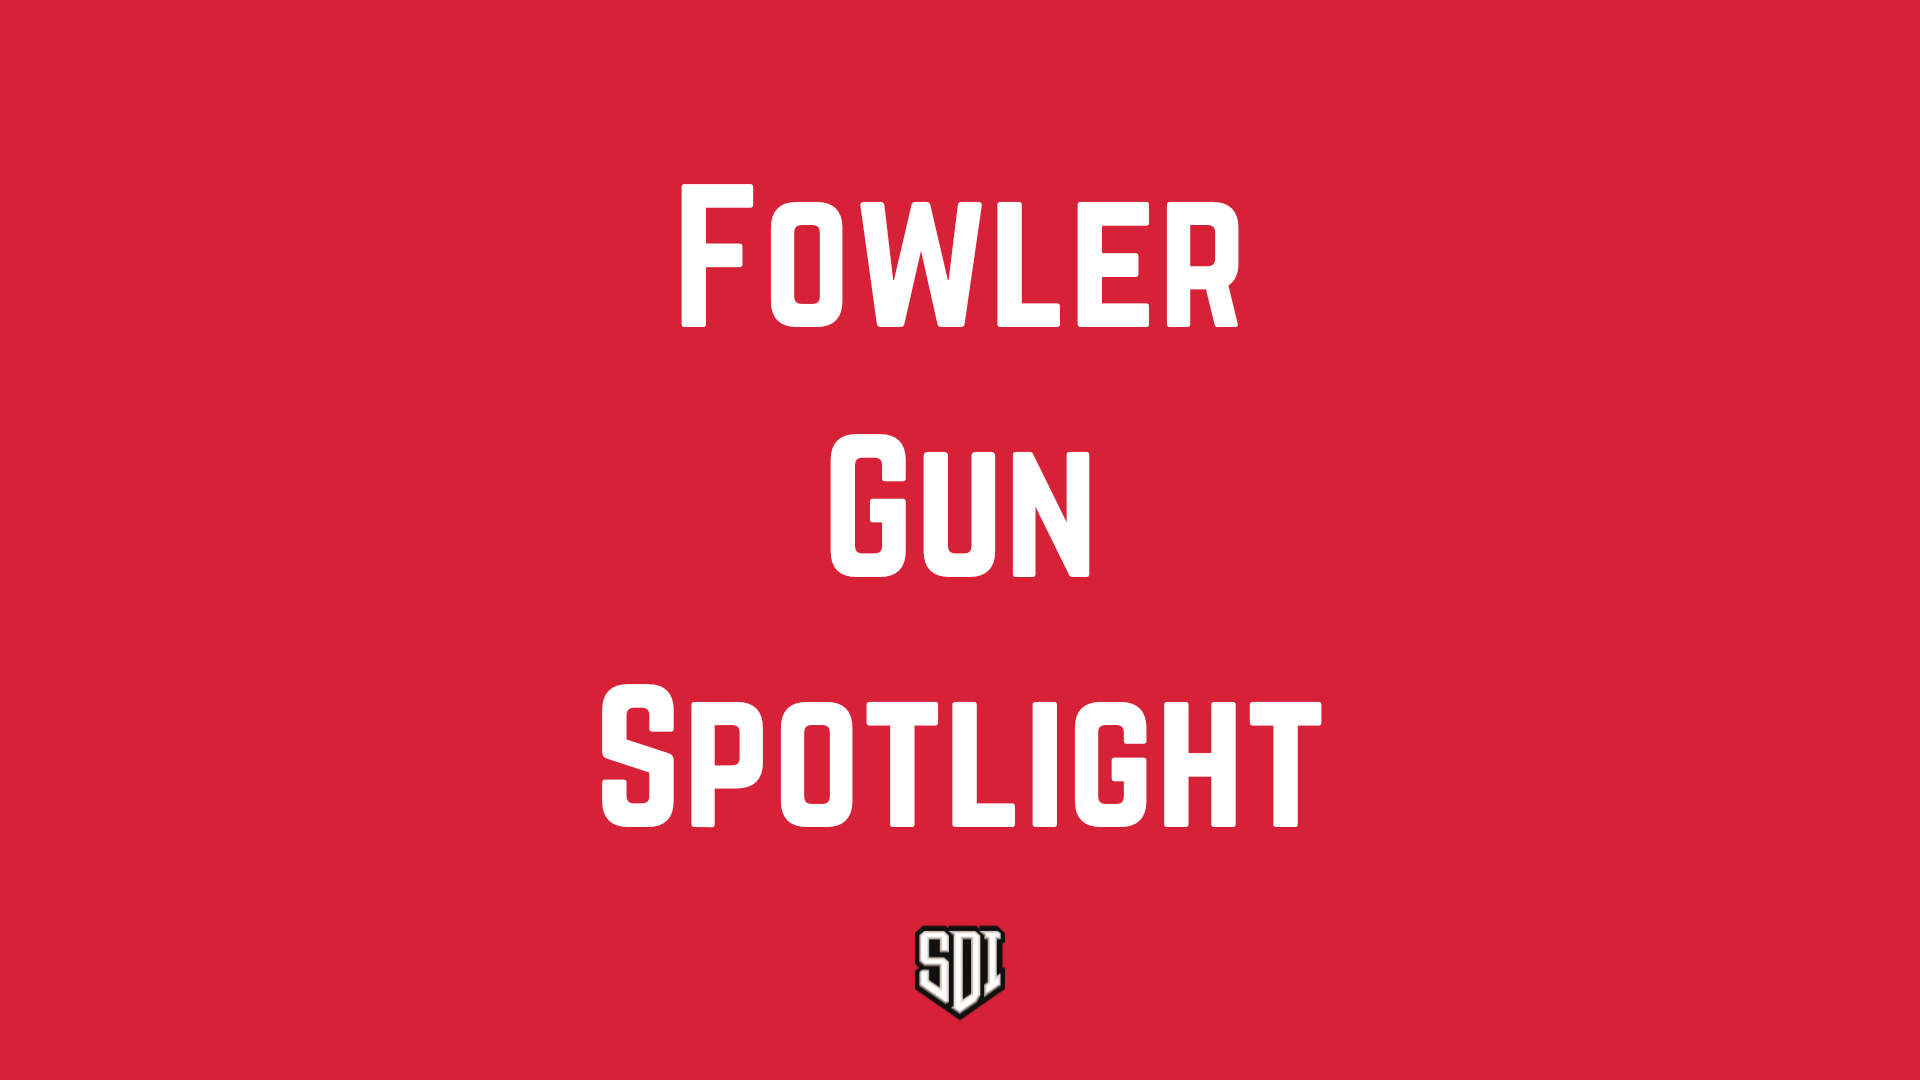 Fowler Gun Spotlight